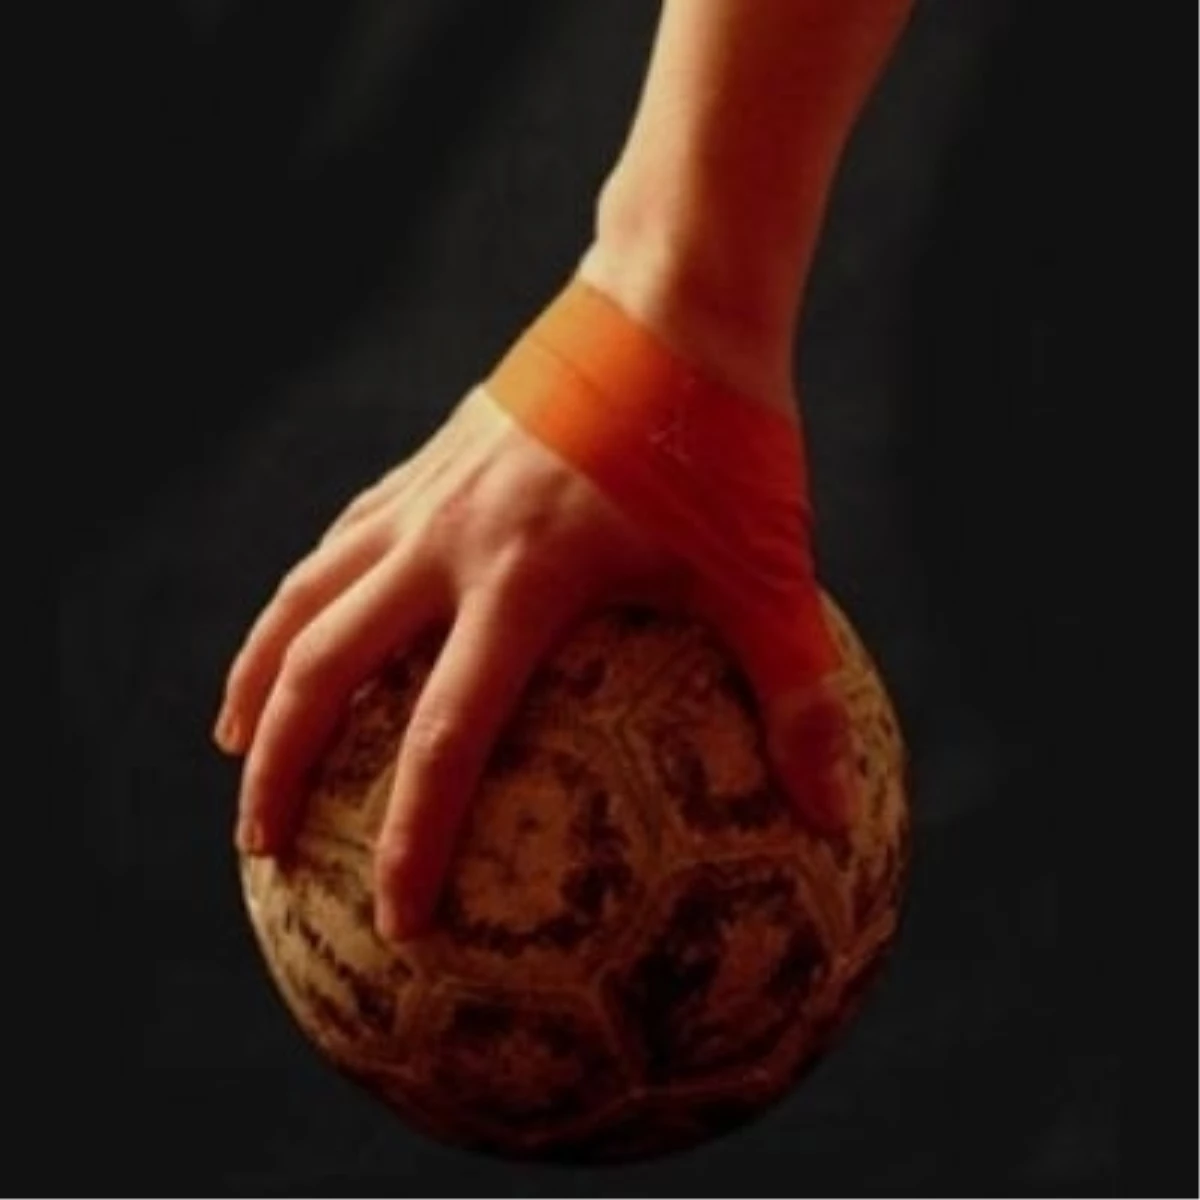 Hentbol: Bayanlar Süper Lig